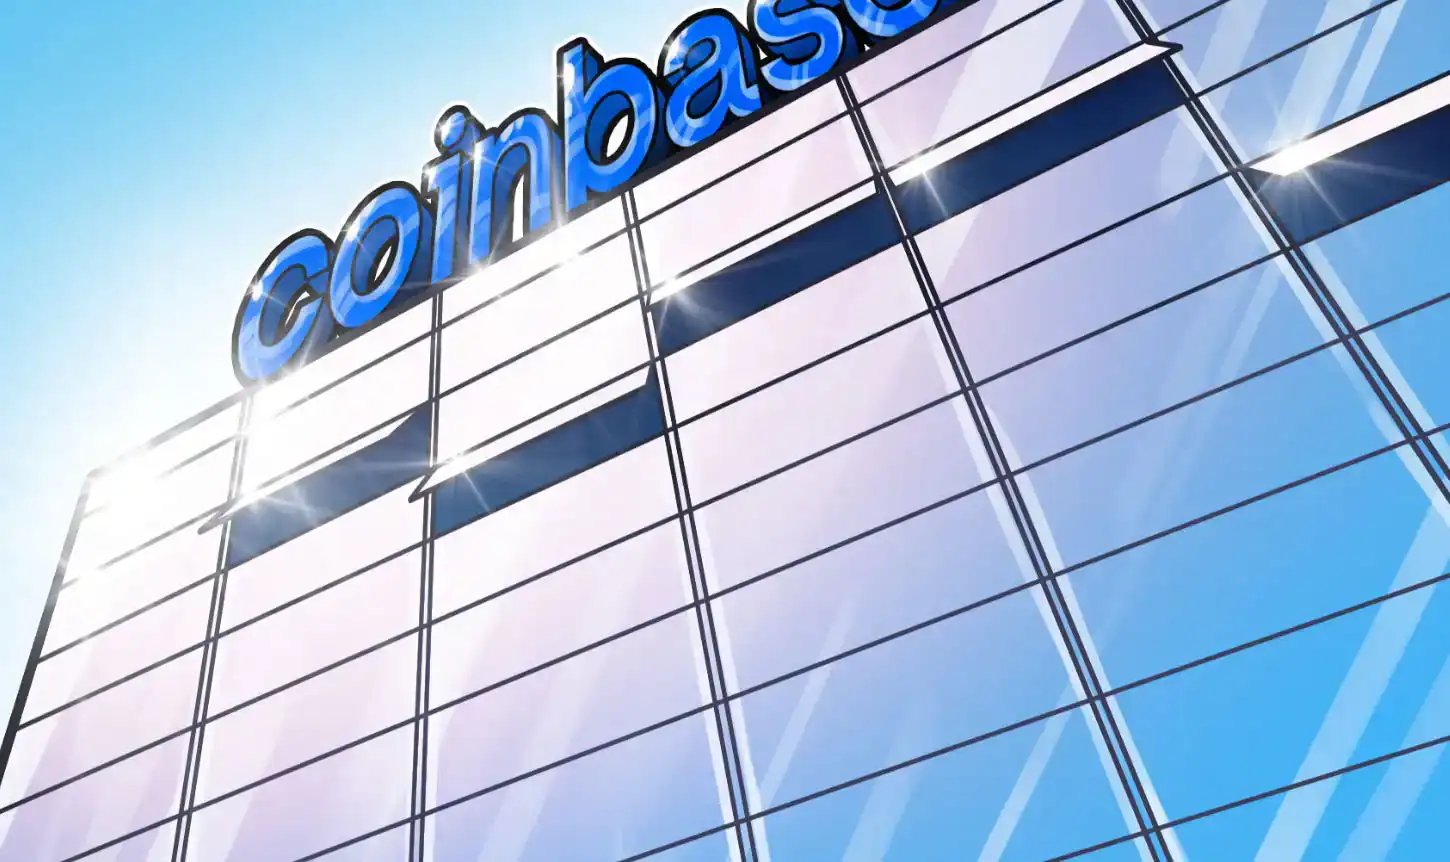 Coinbase Shares Rise Despite Platform Issues